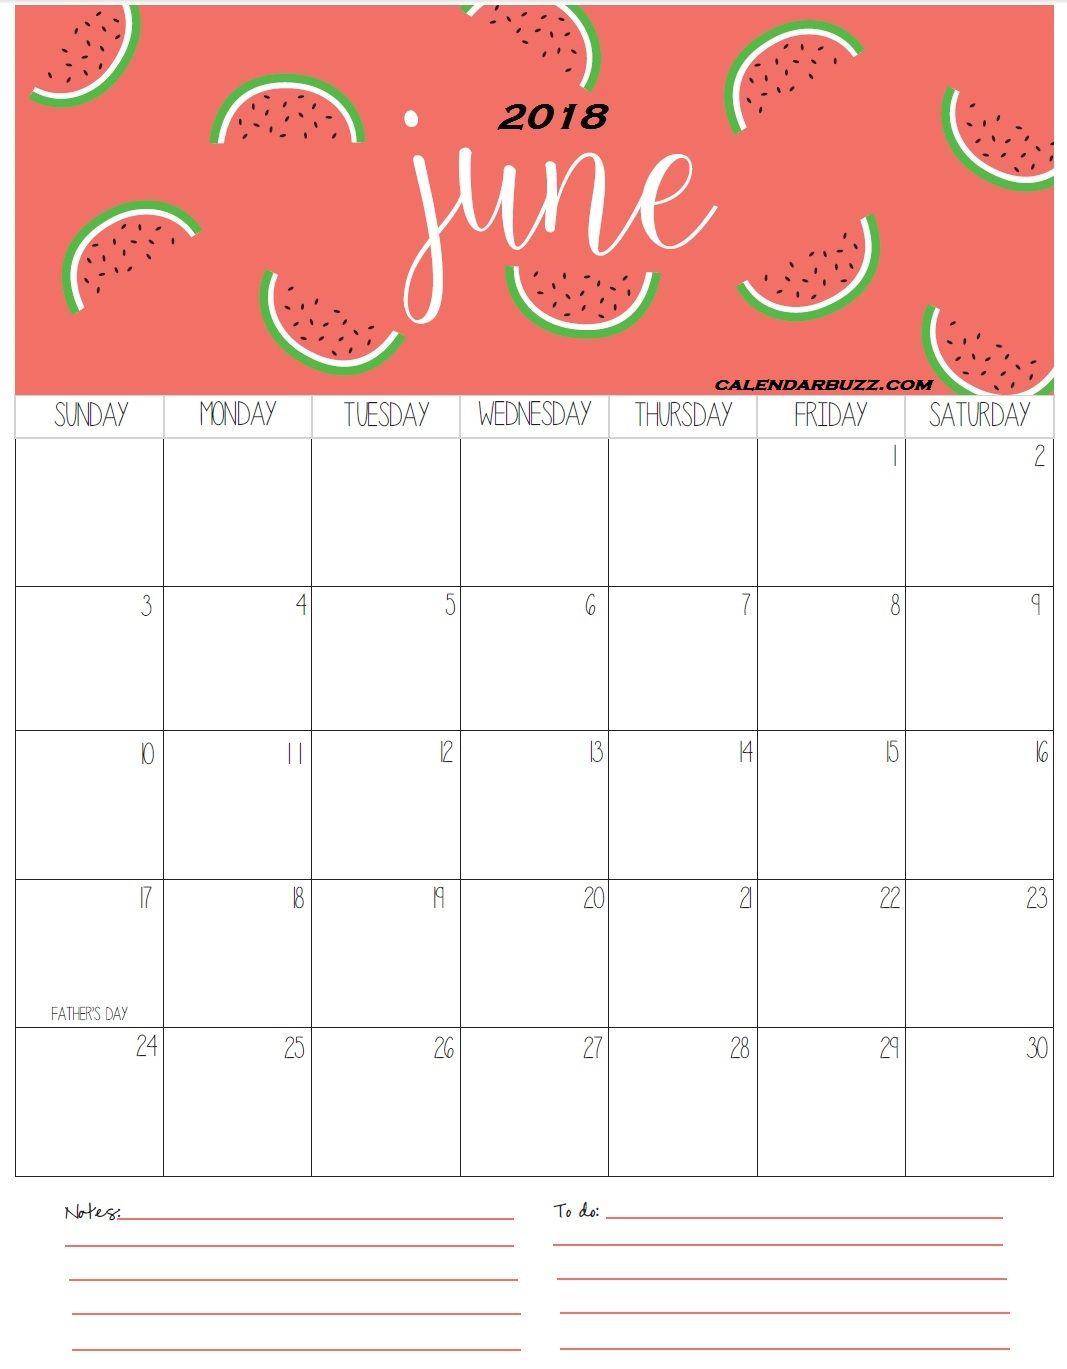 June 2018 Personalized Desk & Wall Calendar